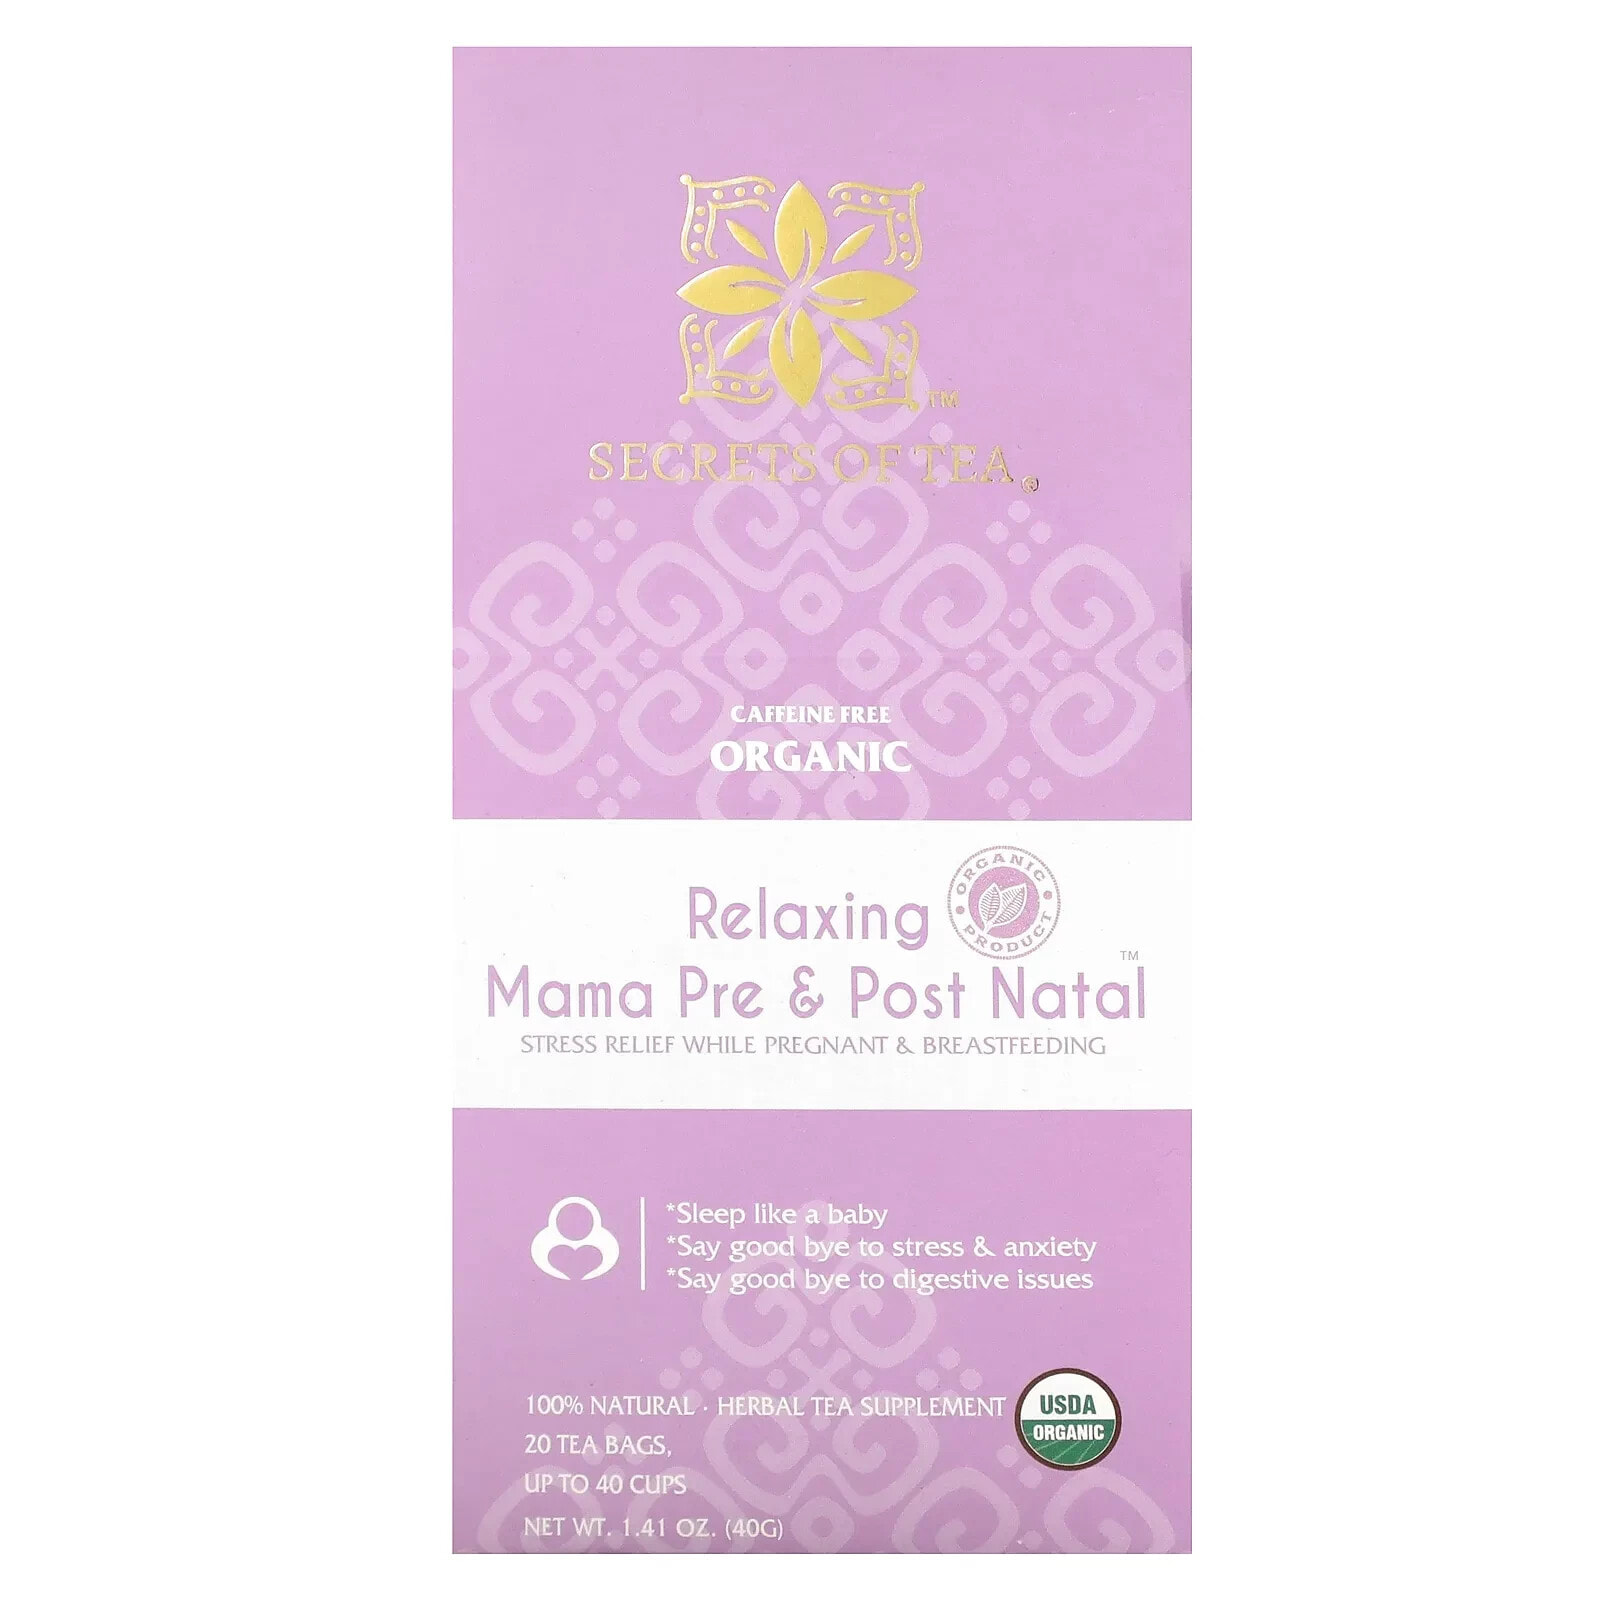 Secrets of Tea, Organic Relaxing Mama Pre & Post Natal, Caffeine Free, 20 Tea Bags, 1.41 oz (40 g)